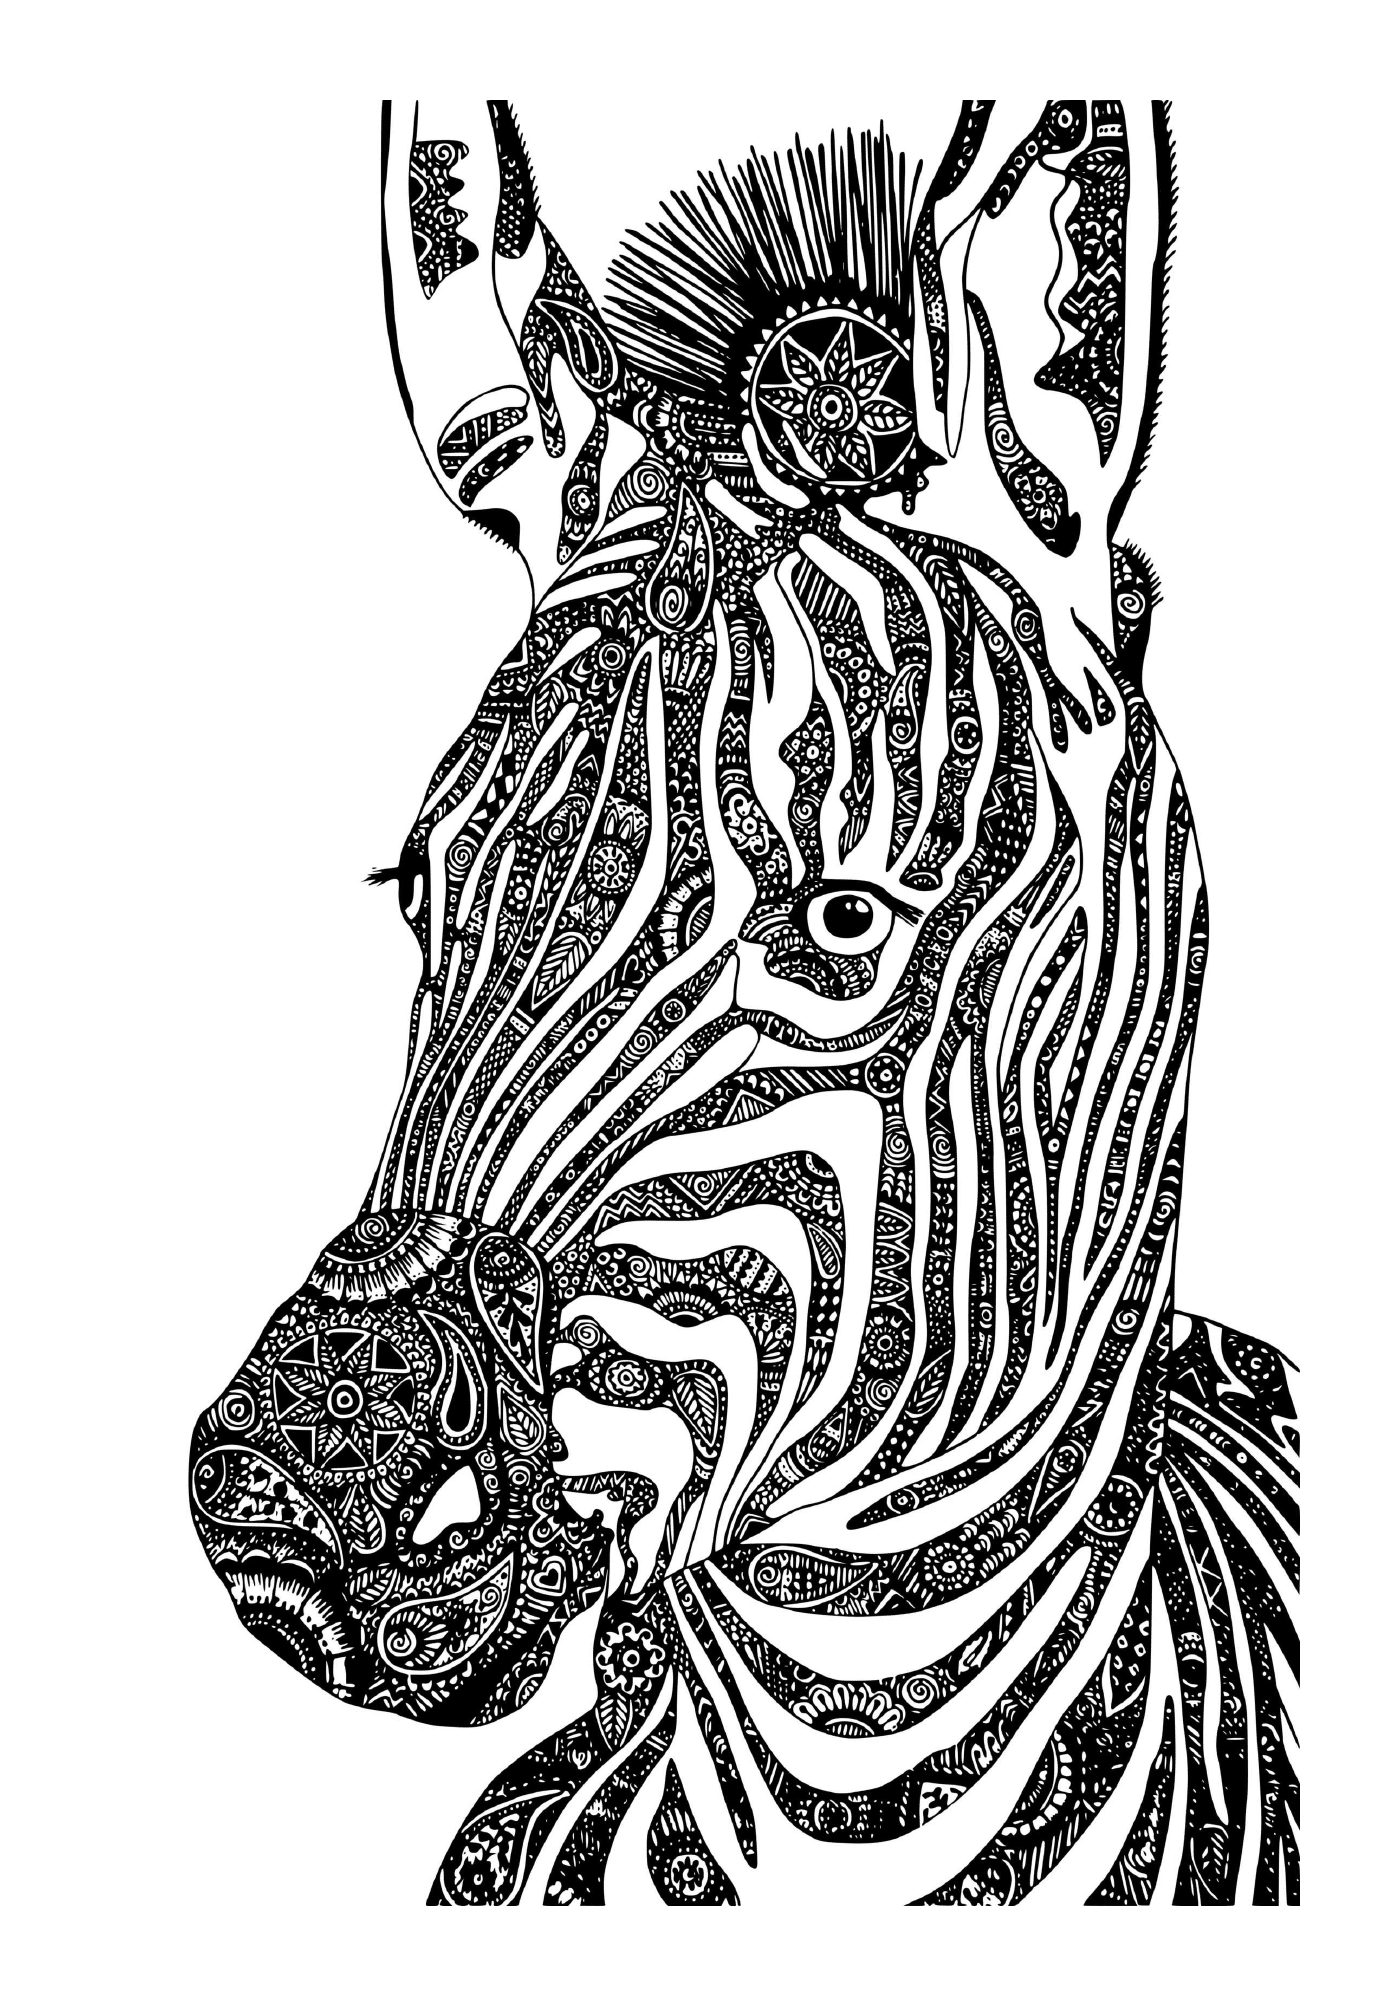  maestosa zebra selvatica 